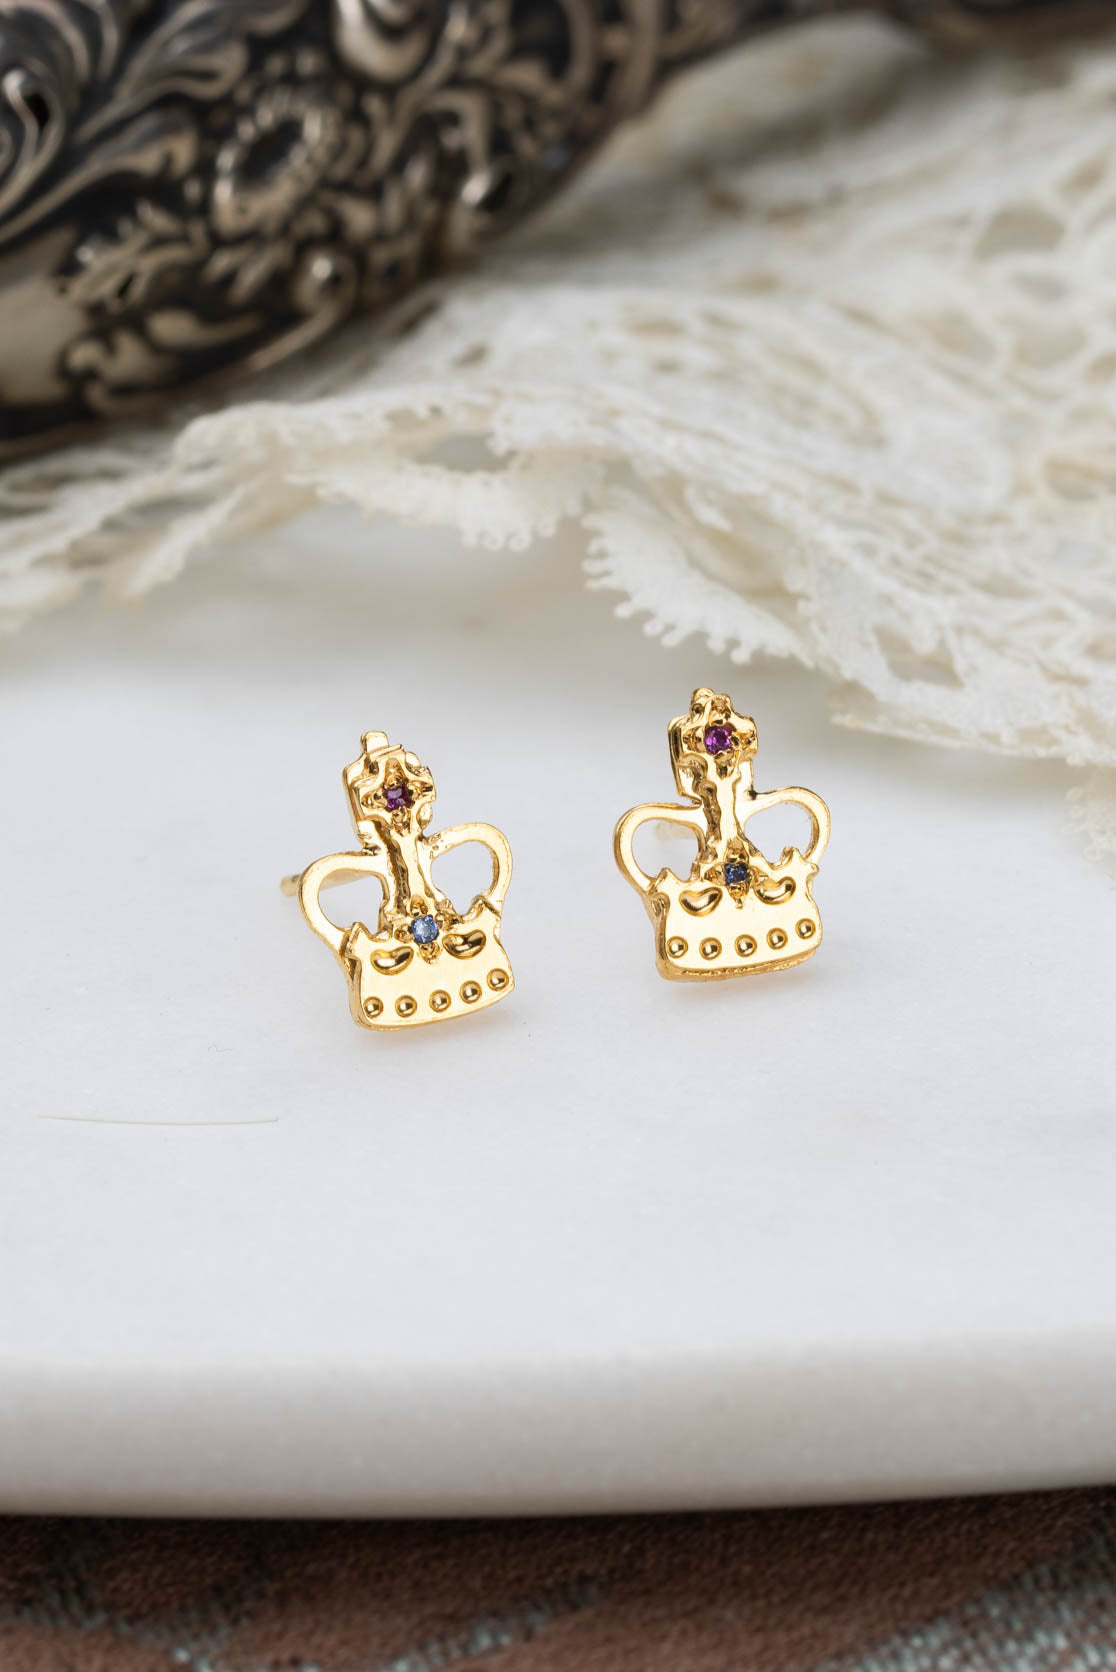 Crown Stud Earrings In Sterling Silver And Gold Vermeil With Gemstones